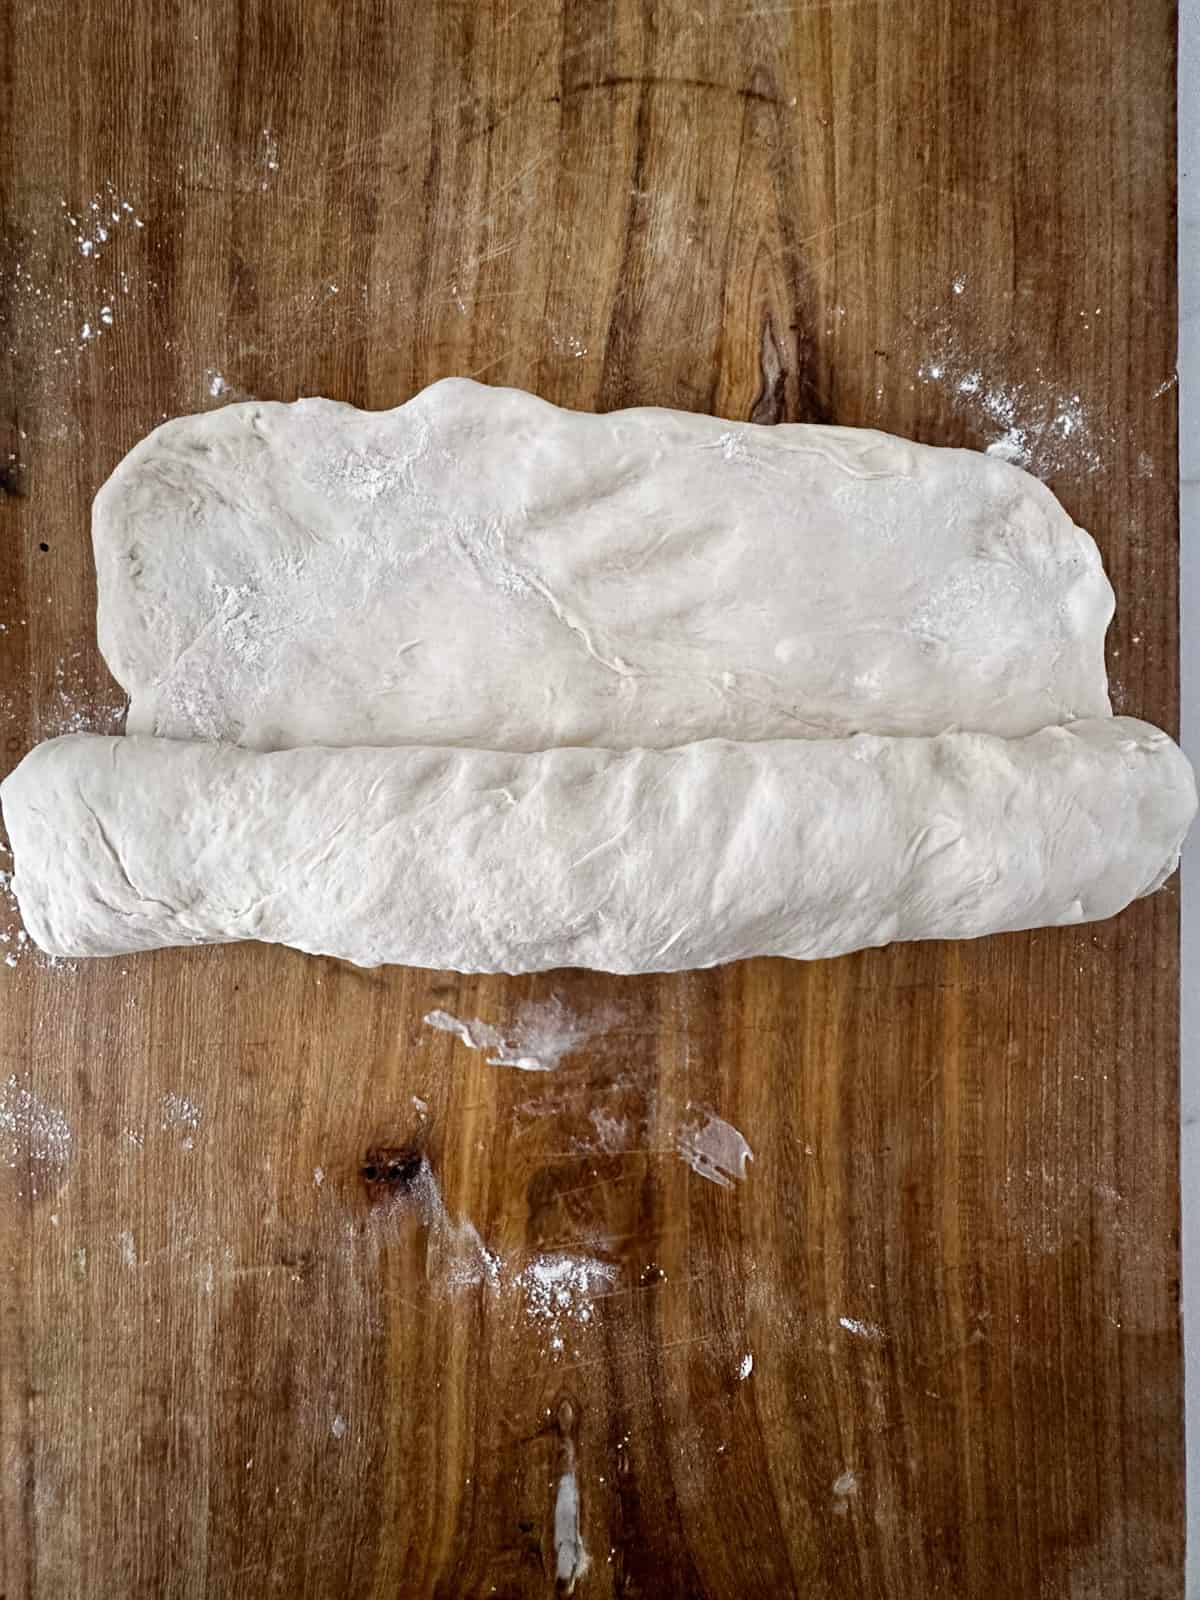 More rolling of the Italian bread dough.